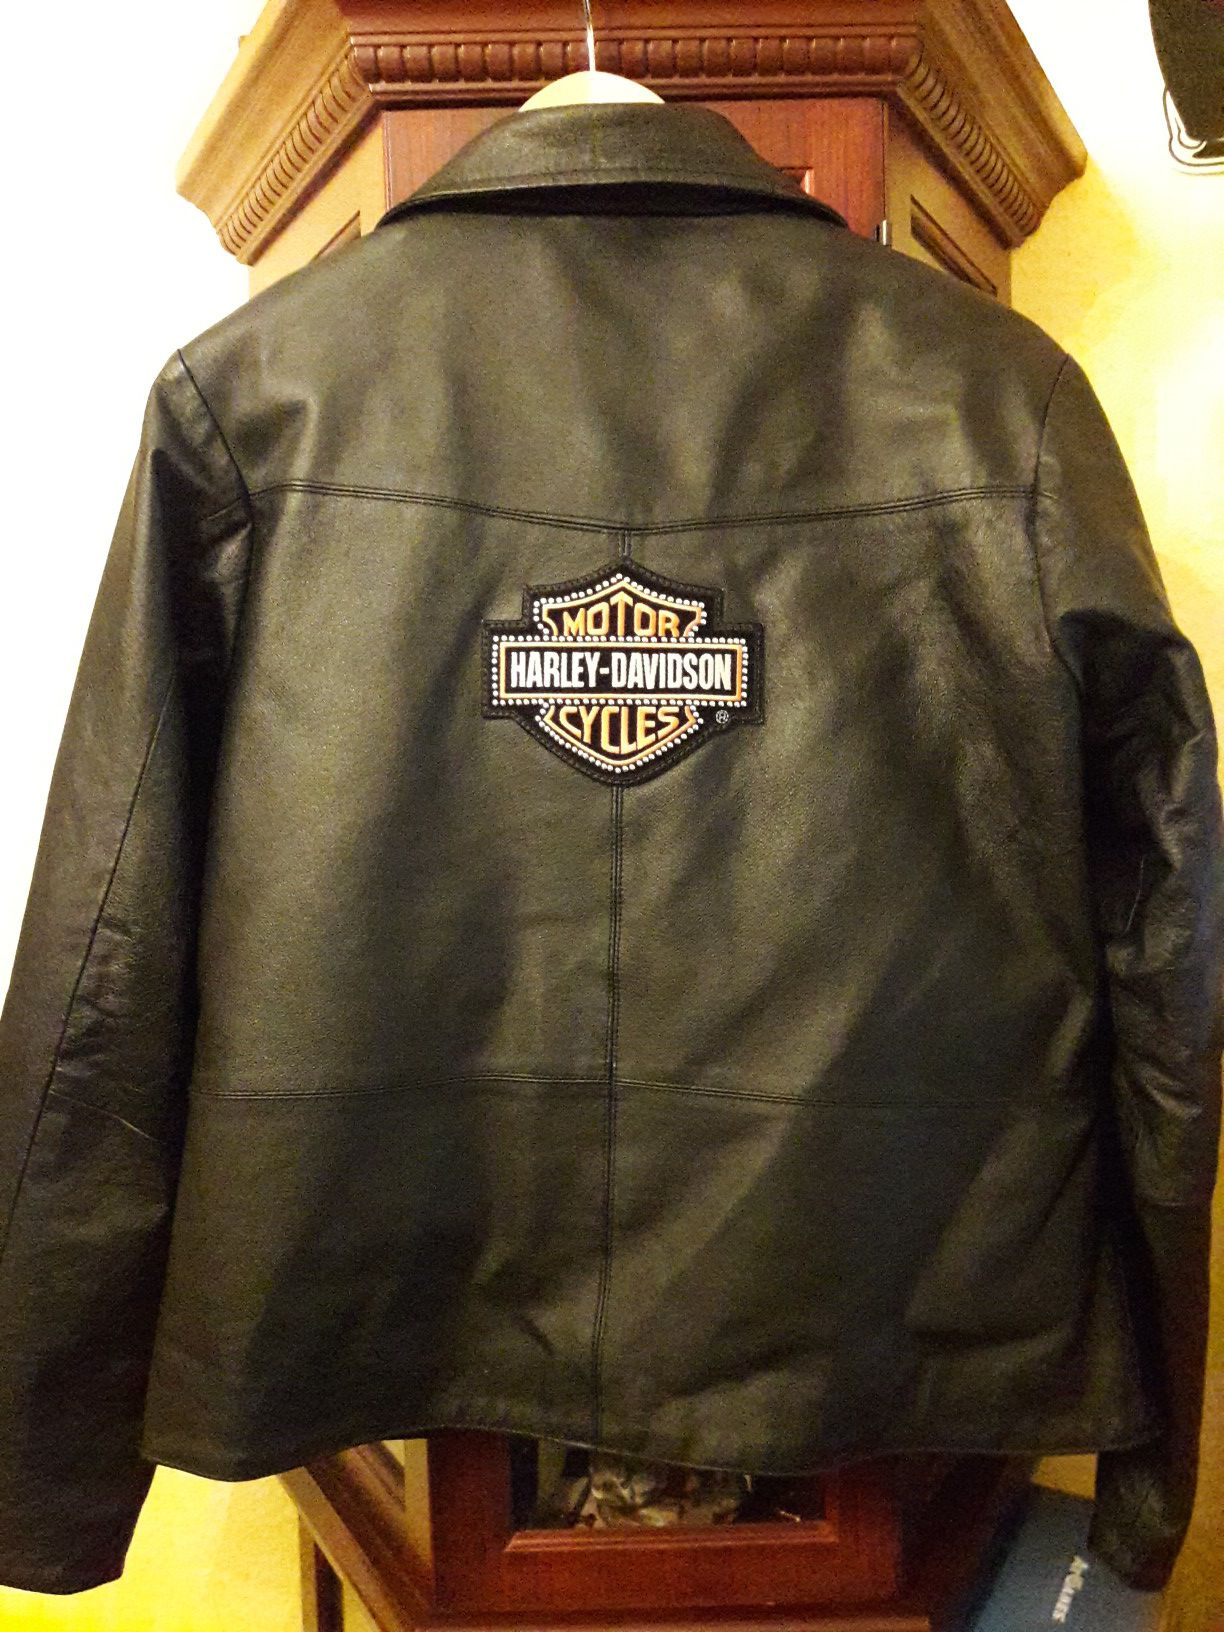 Wilda Harley Davidson woman's leather jacket